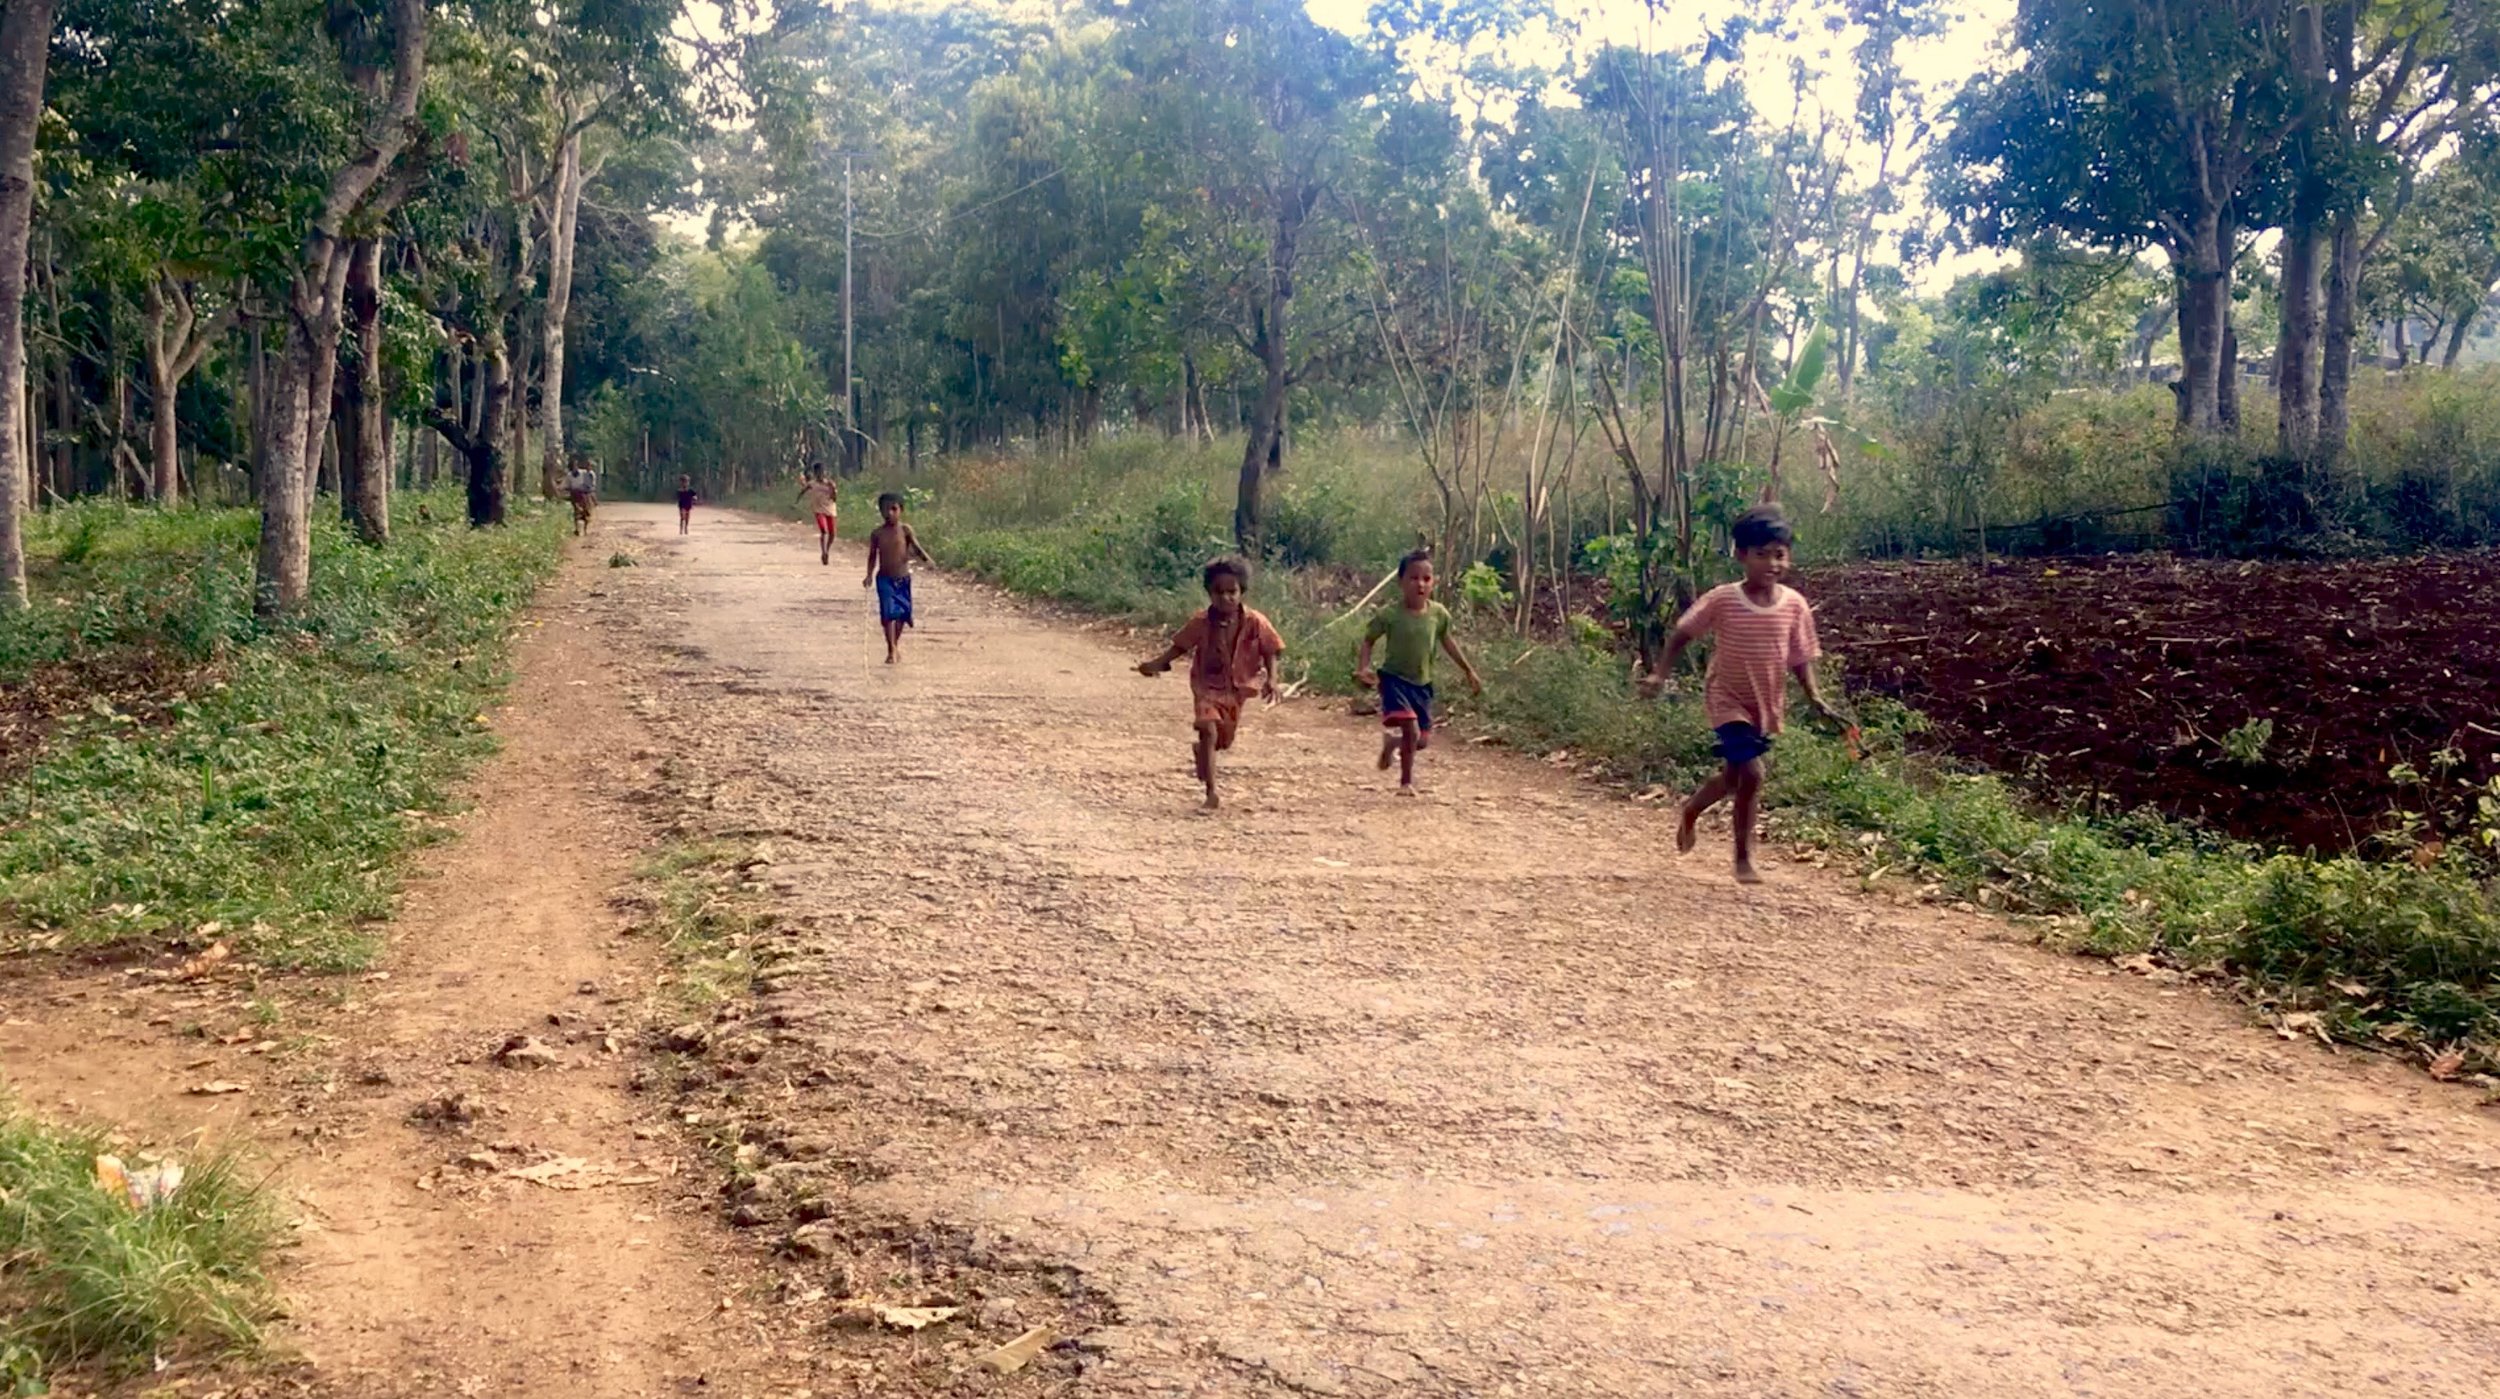 Young children in the village of Triloka, Timor-Leste photo by Davar Ardalan 